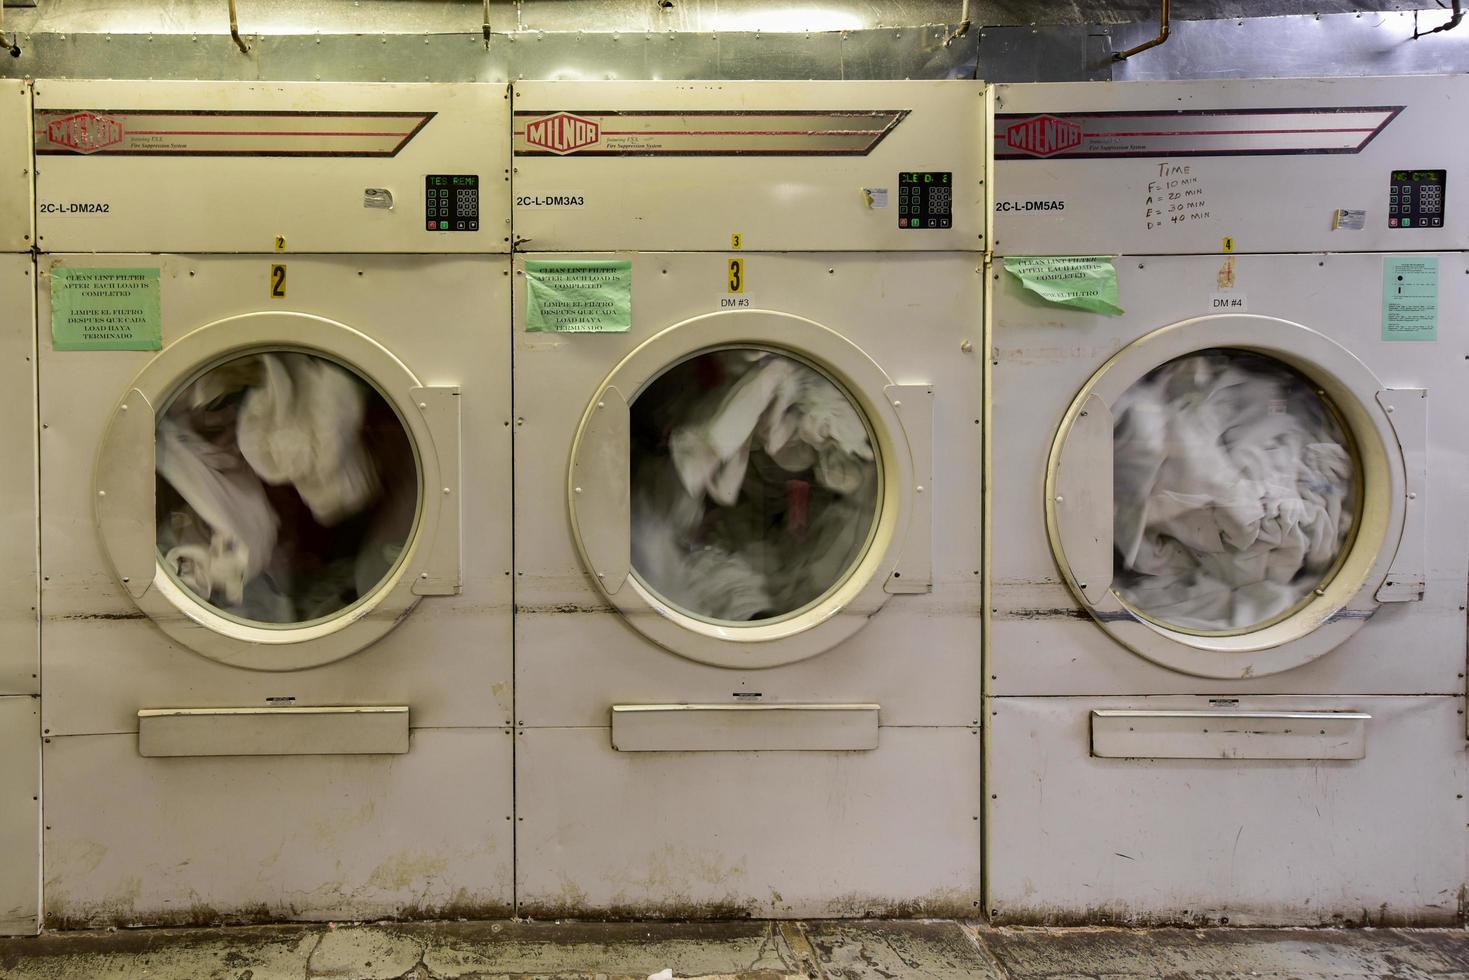 nieuw york stad - juni 14, 2017 - typisch industrieel het wassen machine net zo gevonden in hotel gebouwen. foto